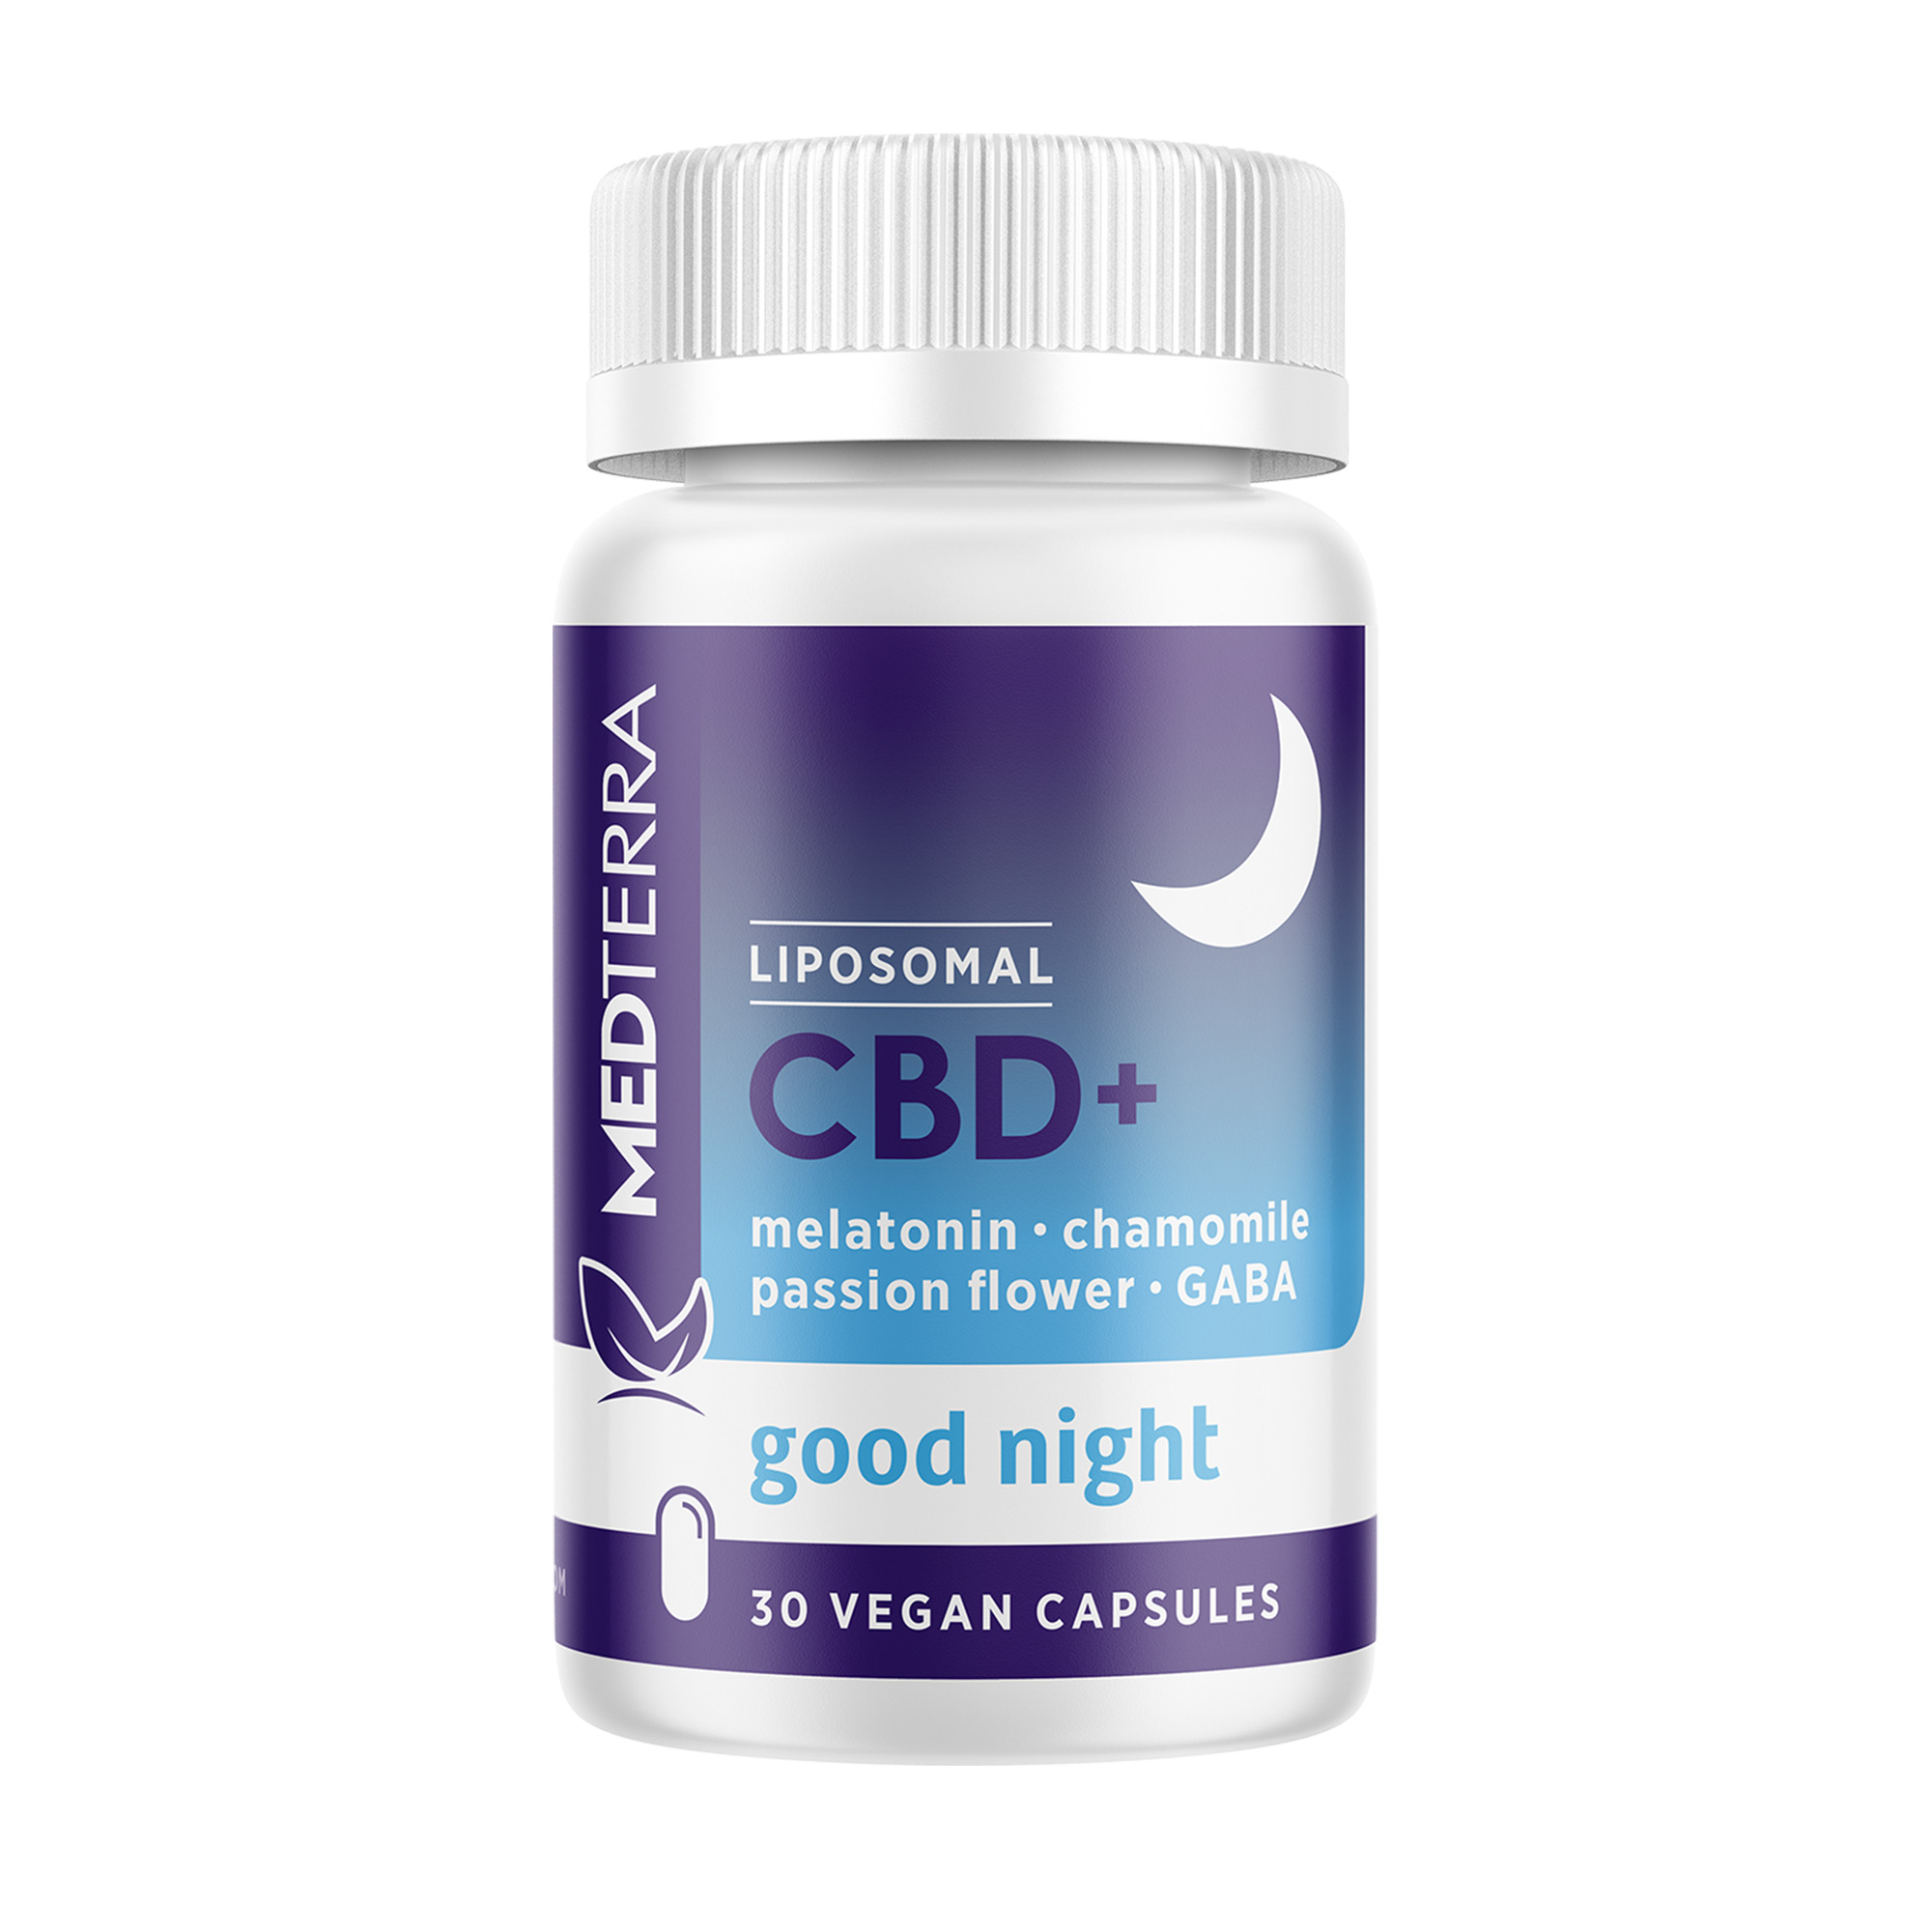 Medterra, Liposomal CBD+ Capsules, Good Night, Isolate THC-Free, 30ct, 750mg CBD